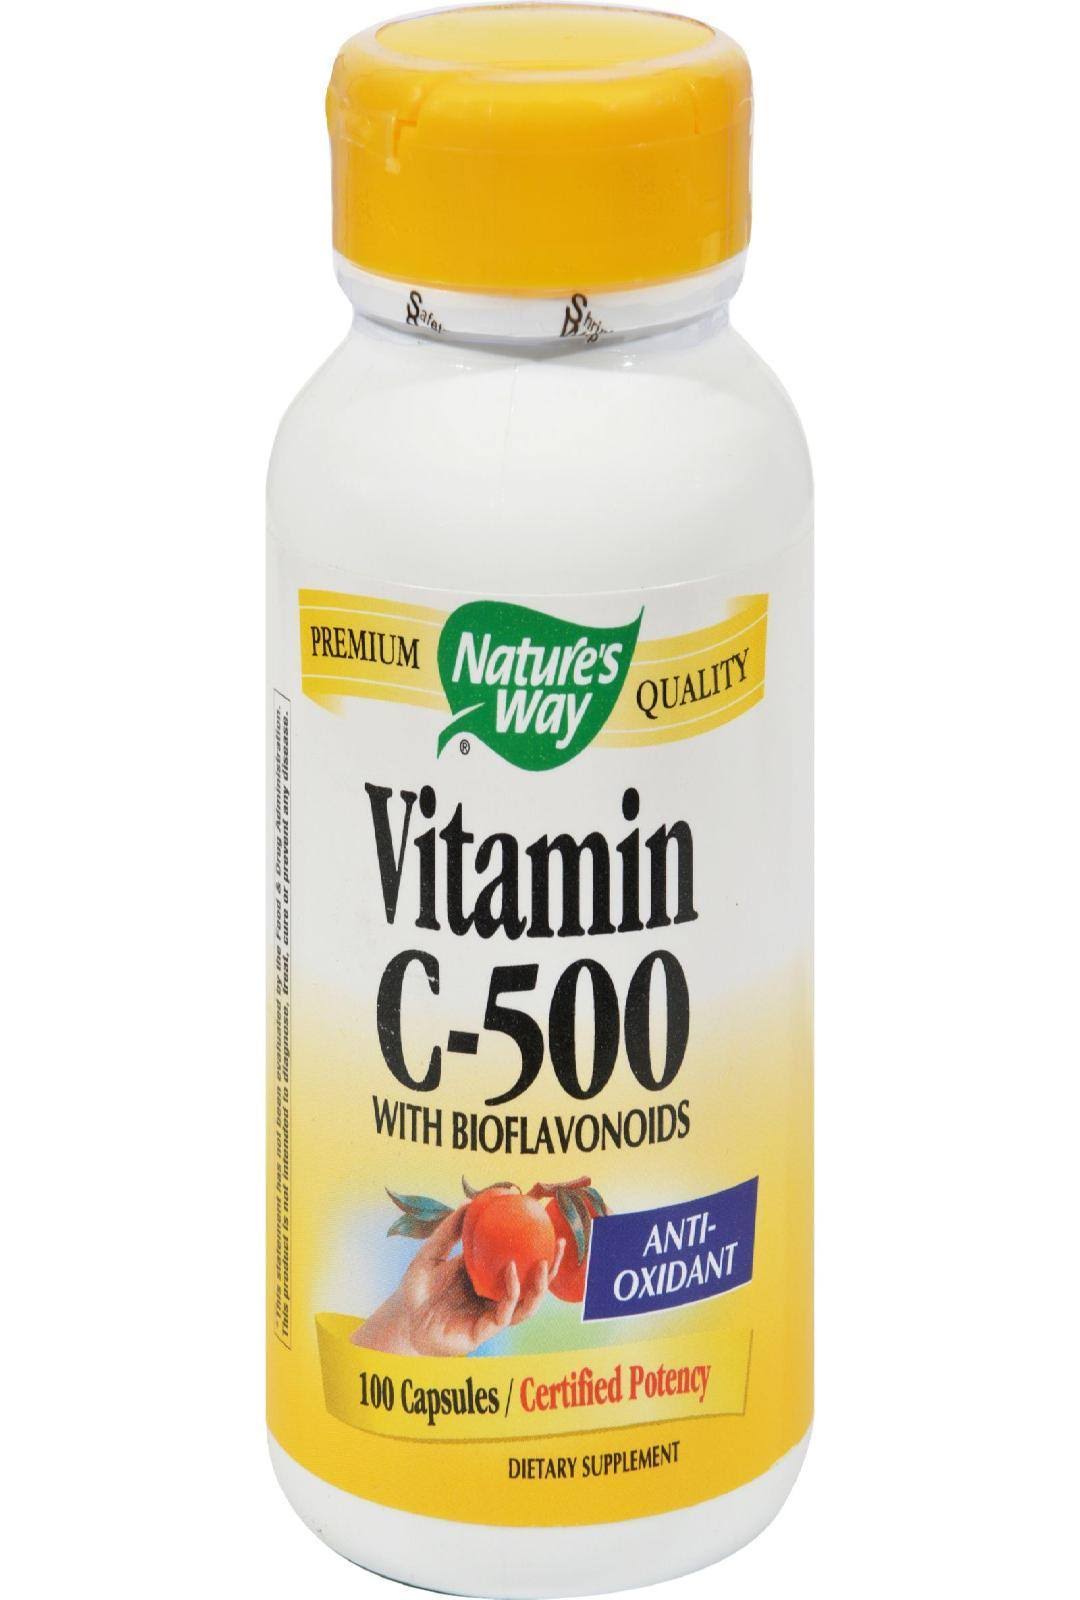 Nature's Way Vitamin C 500 Supplement - 100 Capsules